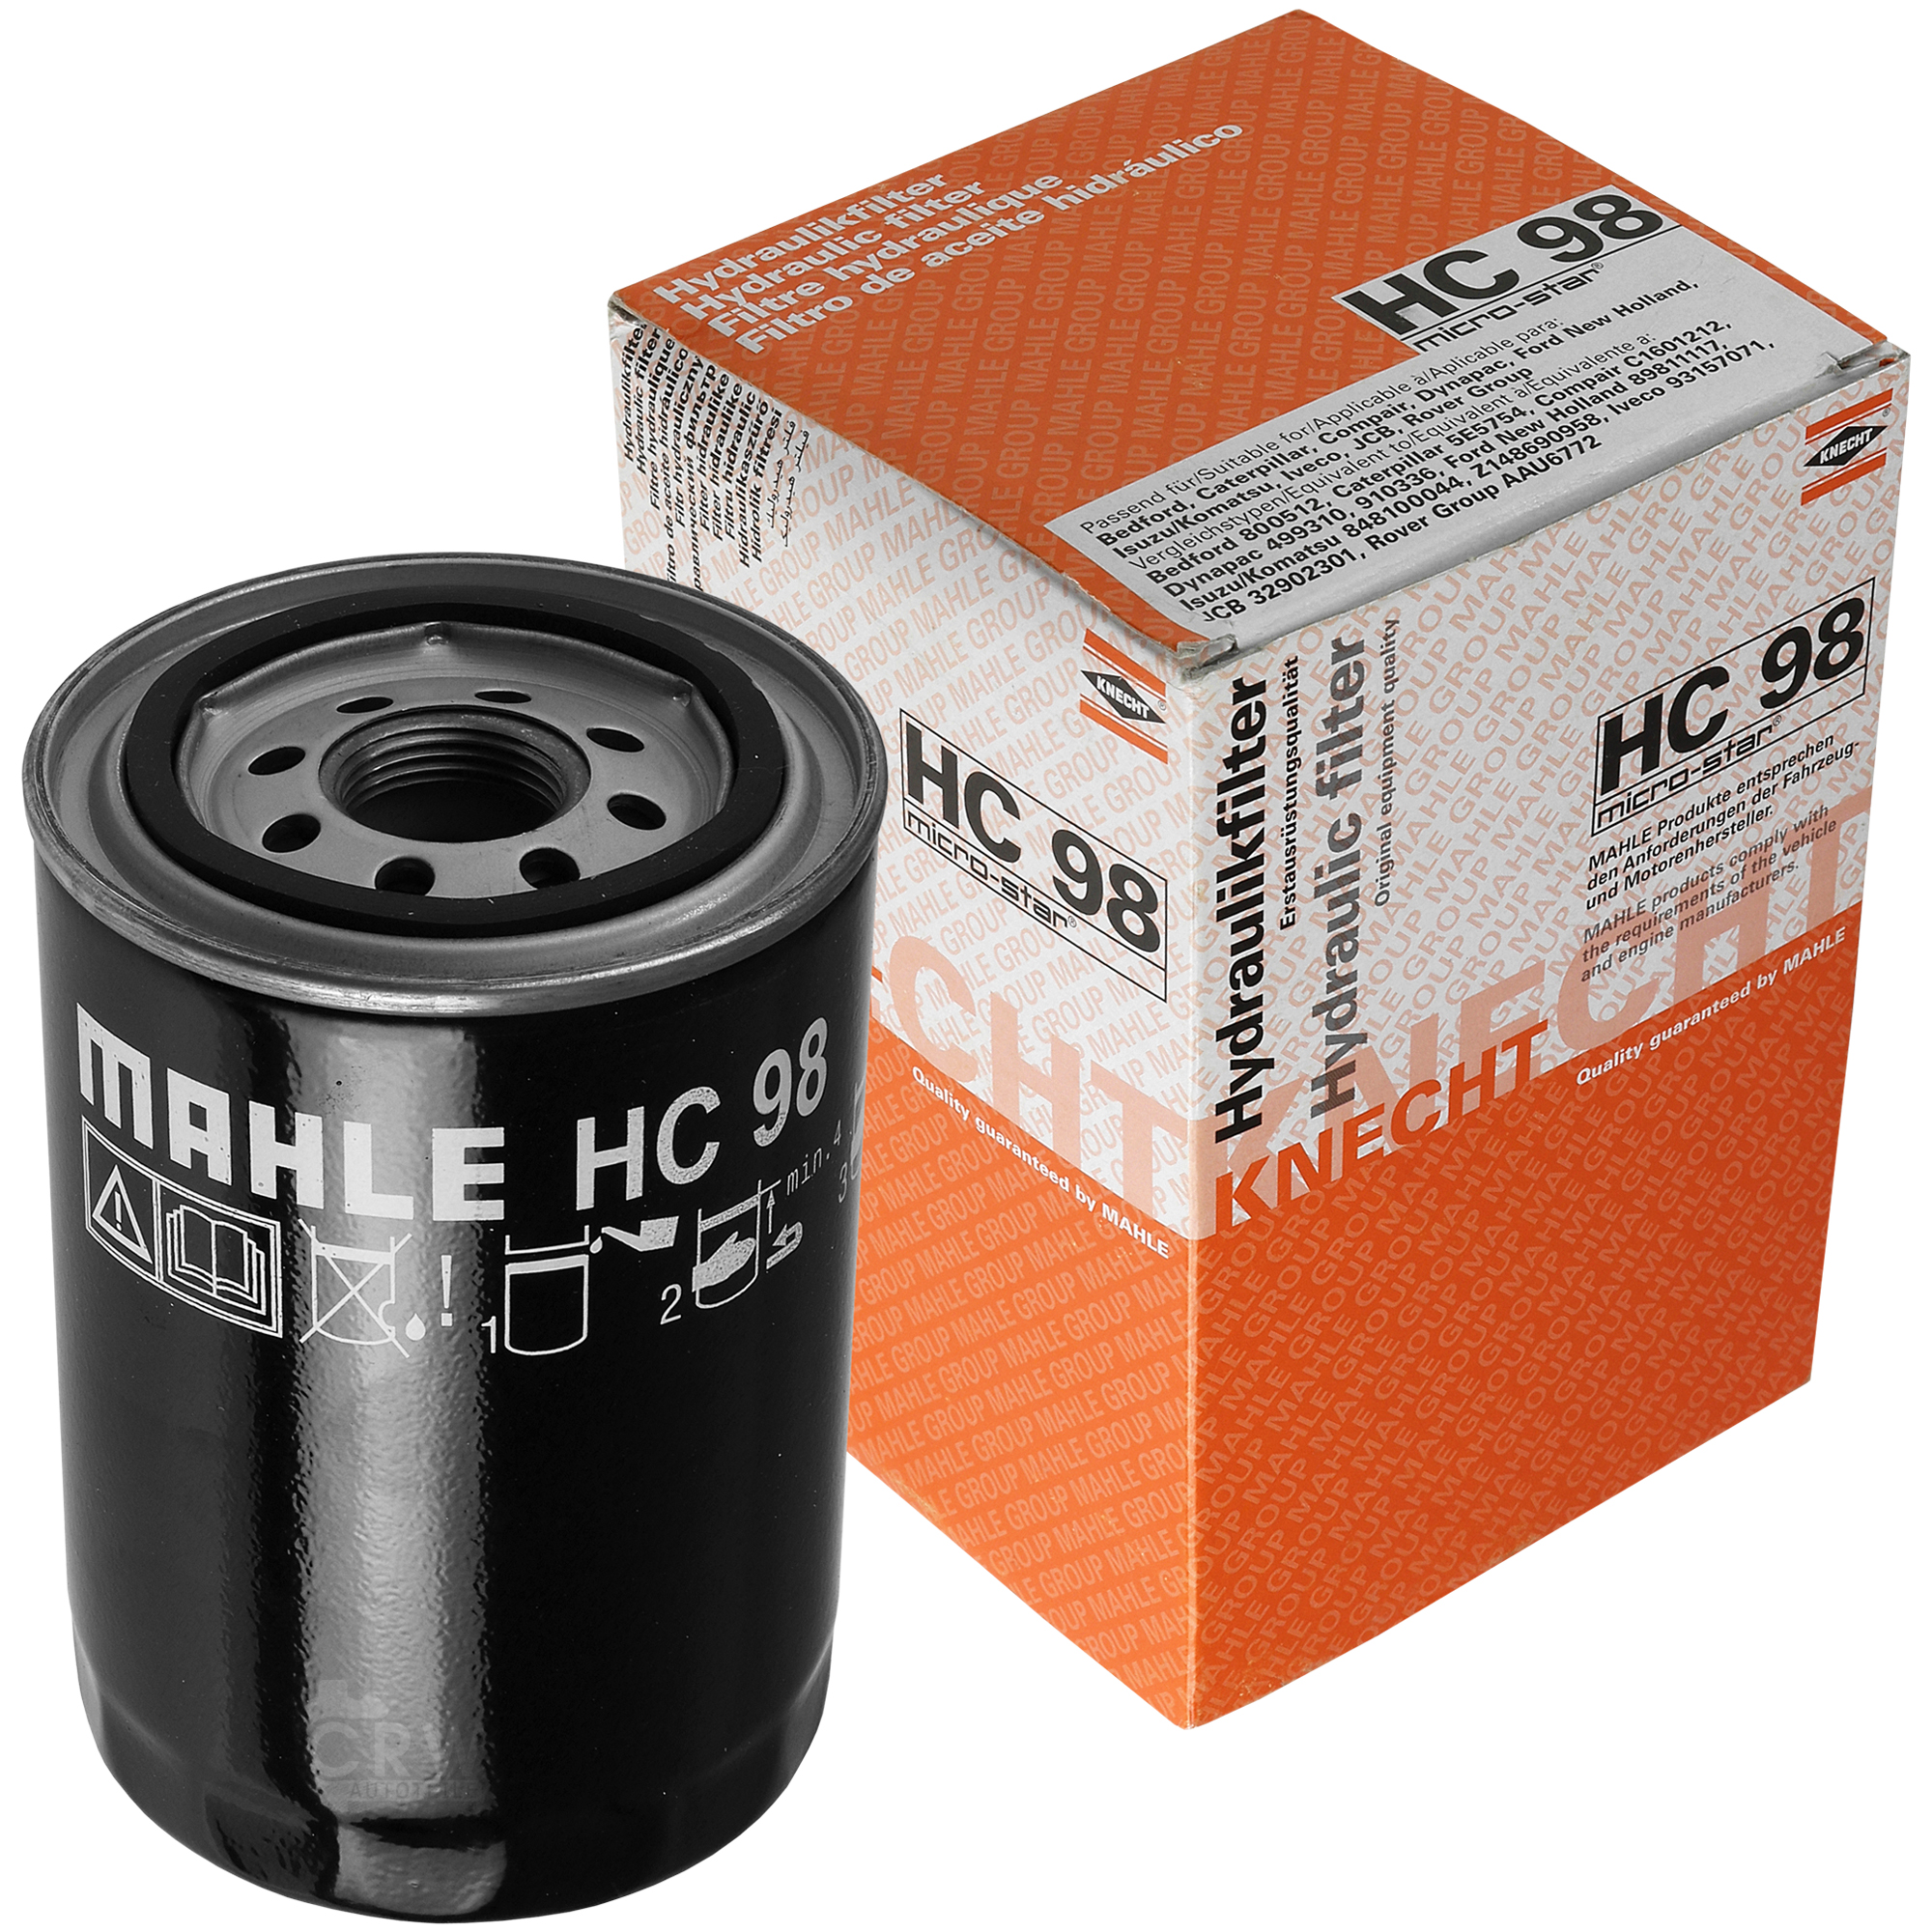 MAHLE / KNECHT HC 98 Hydraulikfilter für Automatikgetriebe